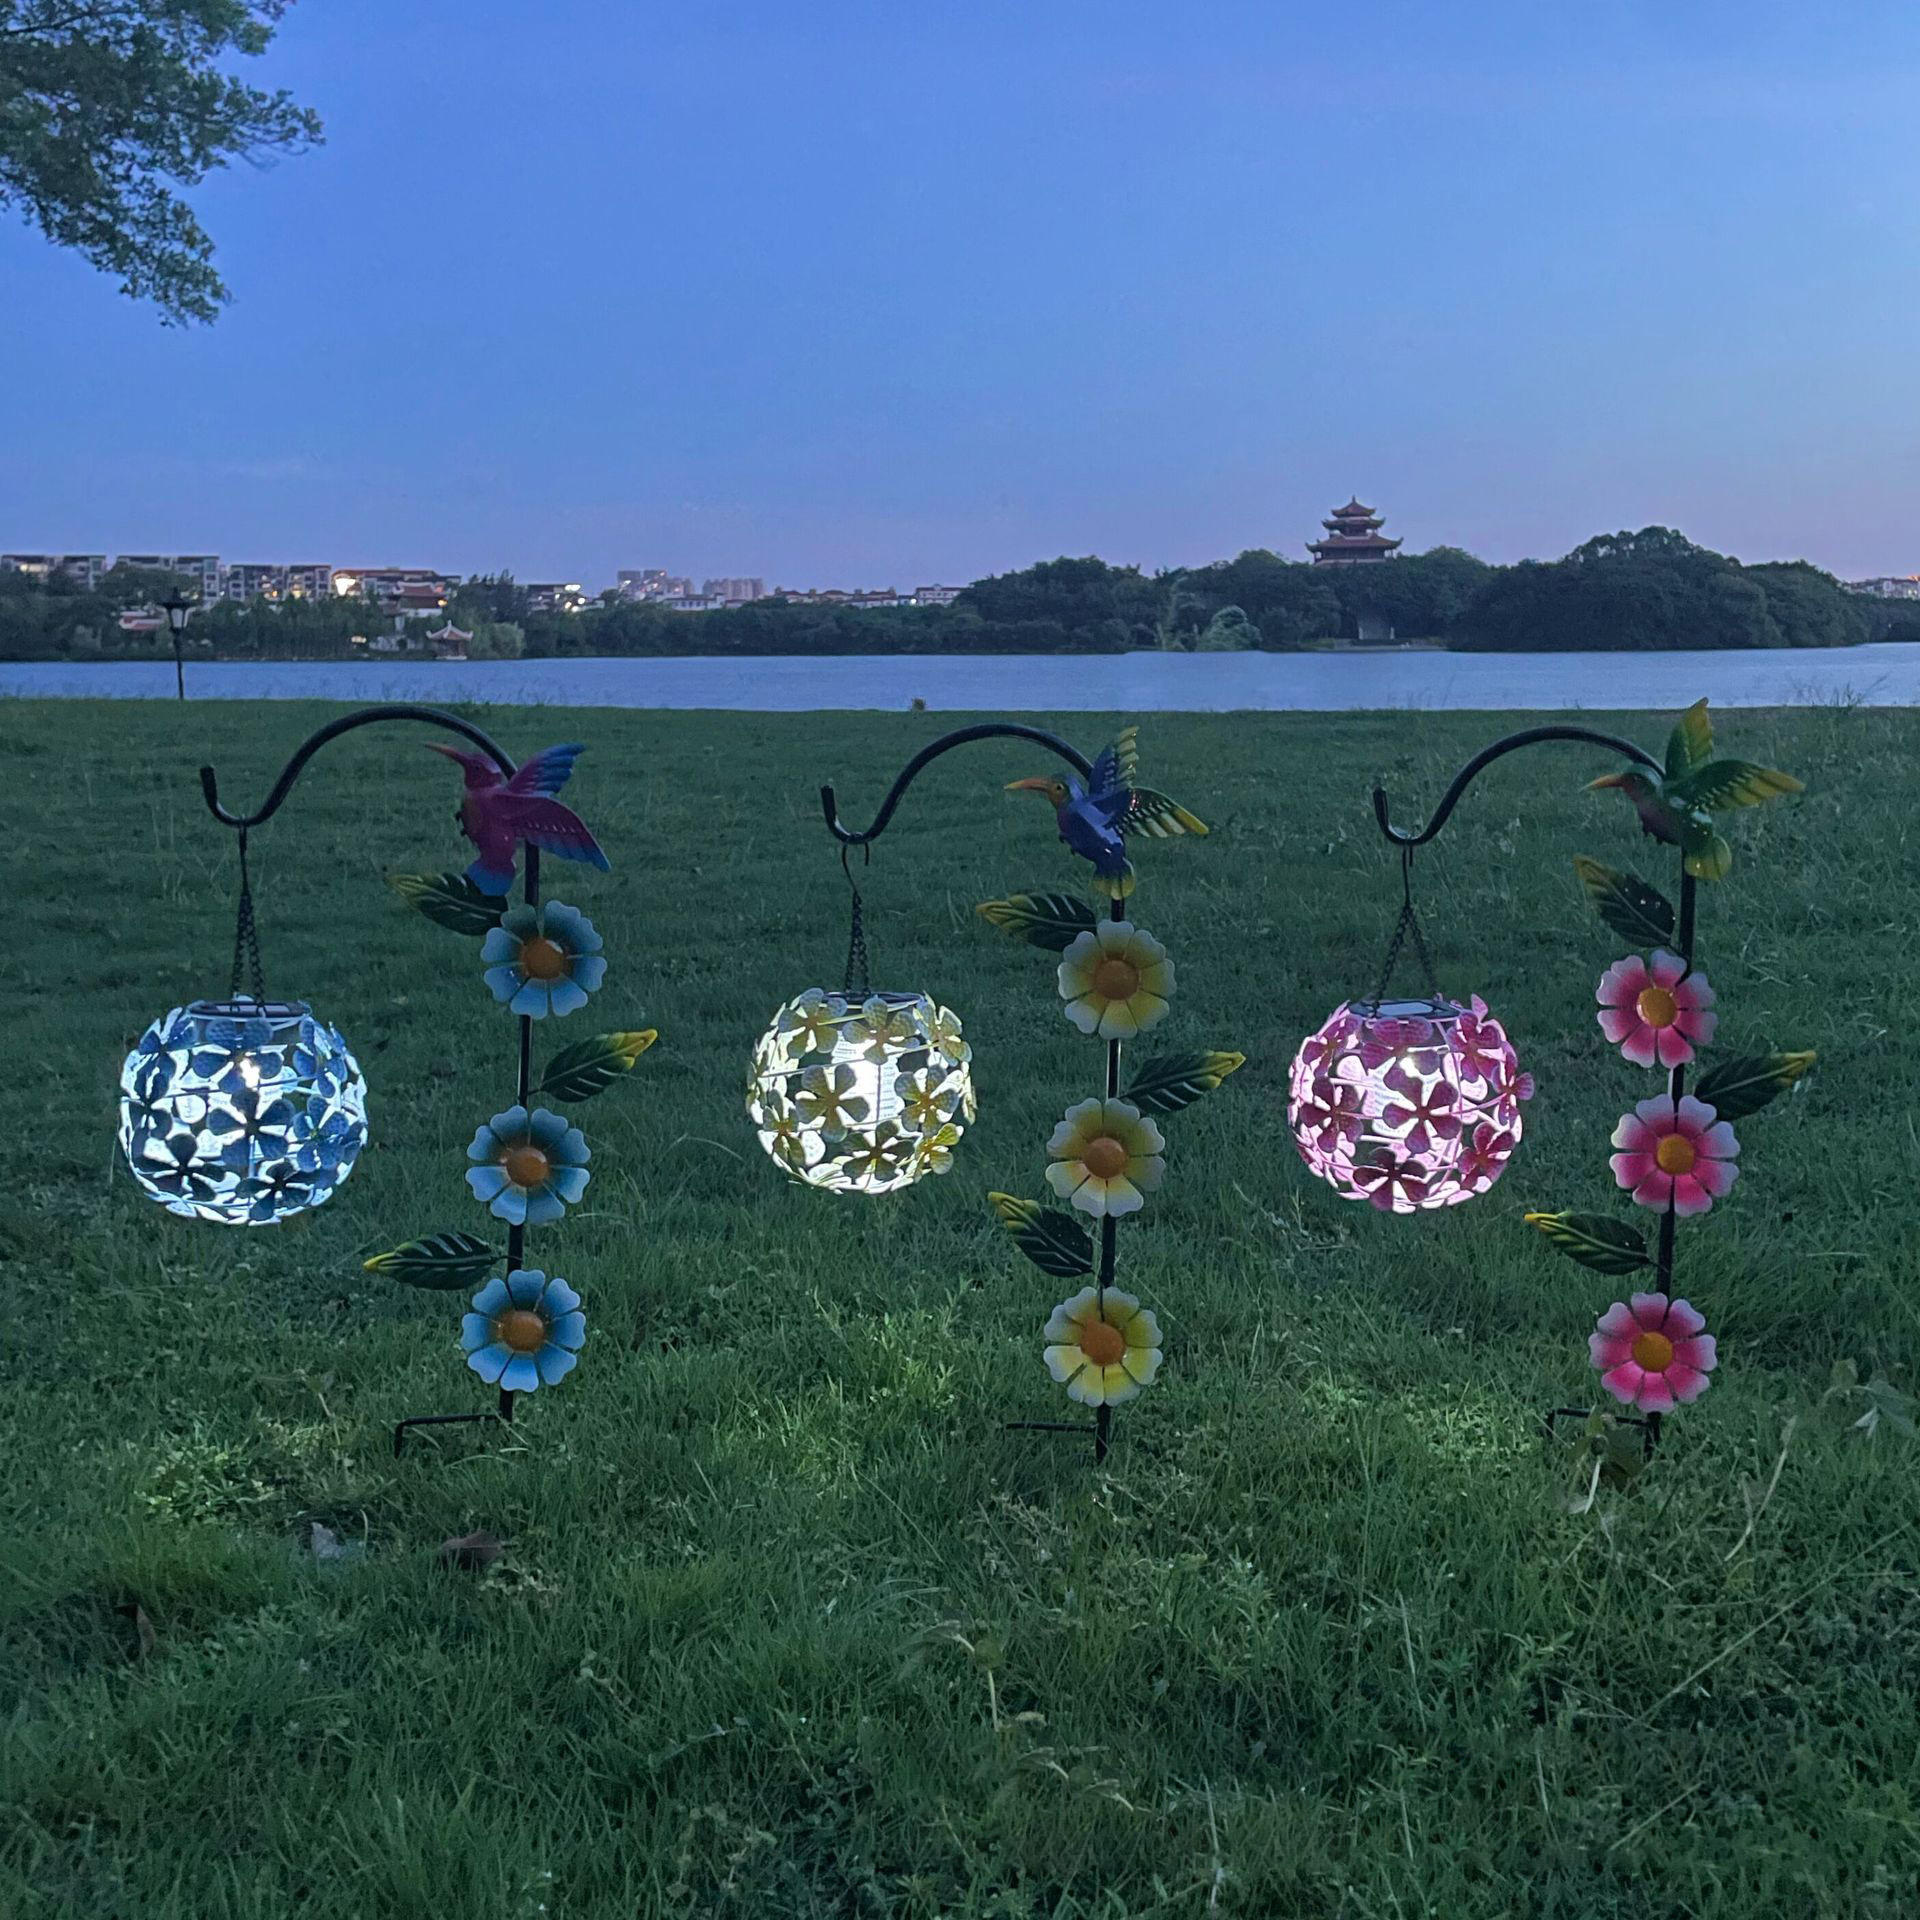 Outdoor Waterproof Metal Solar Led Light Flower Ball For Yard Art Decoration Garden Street Lawn Stakes